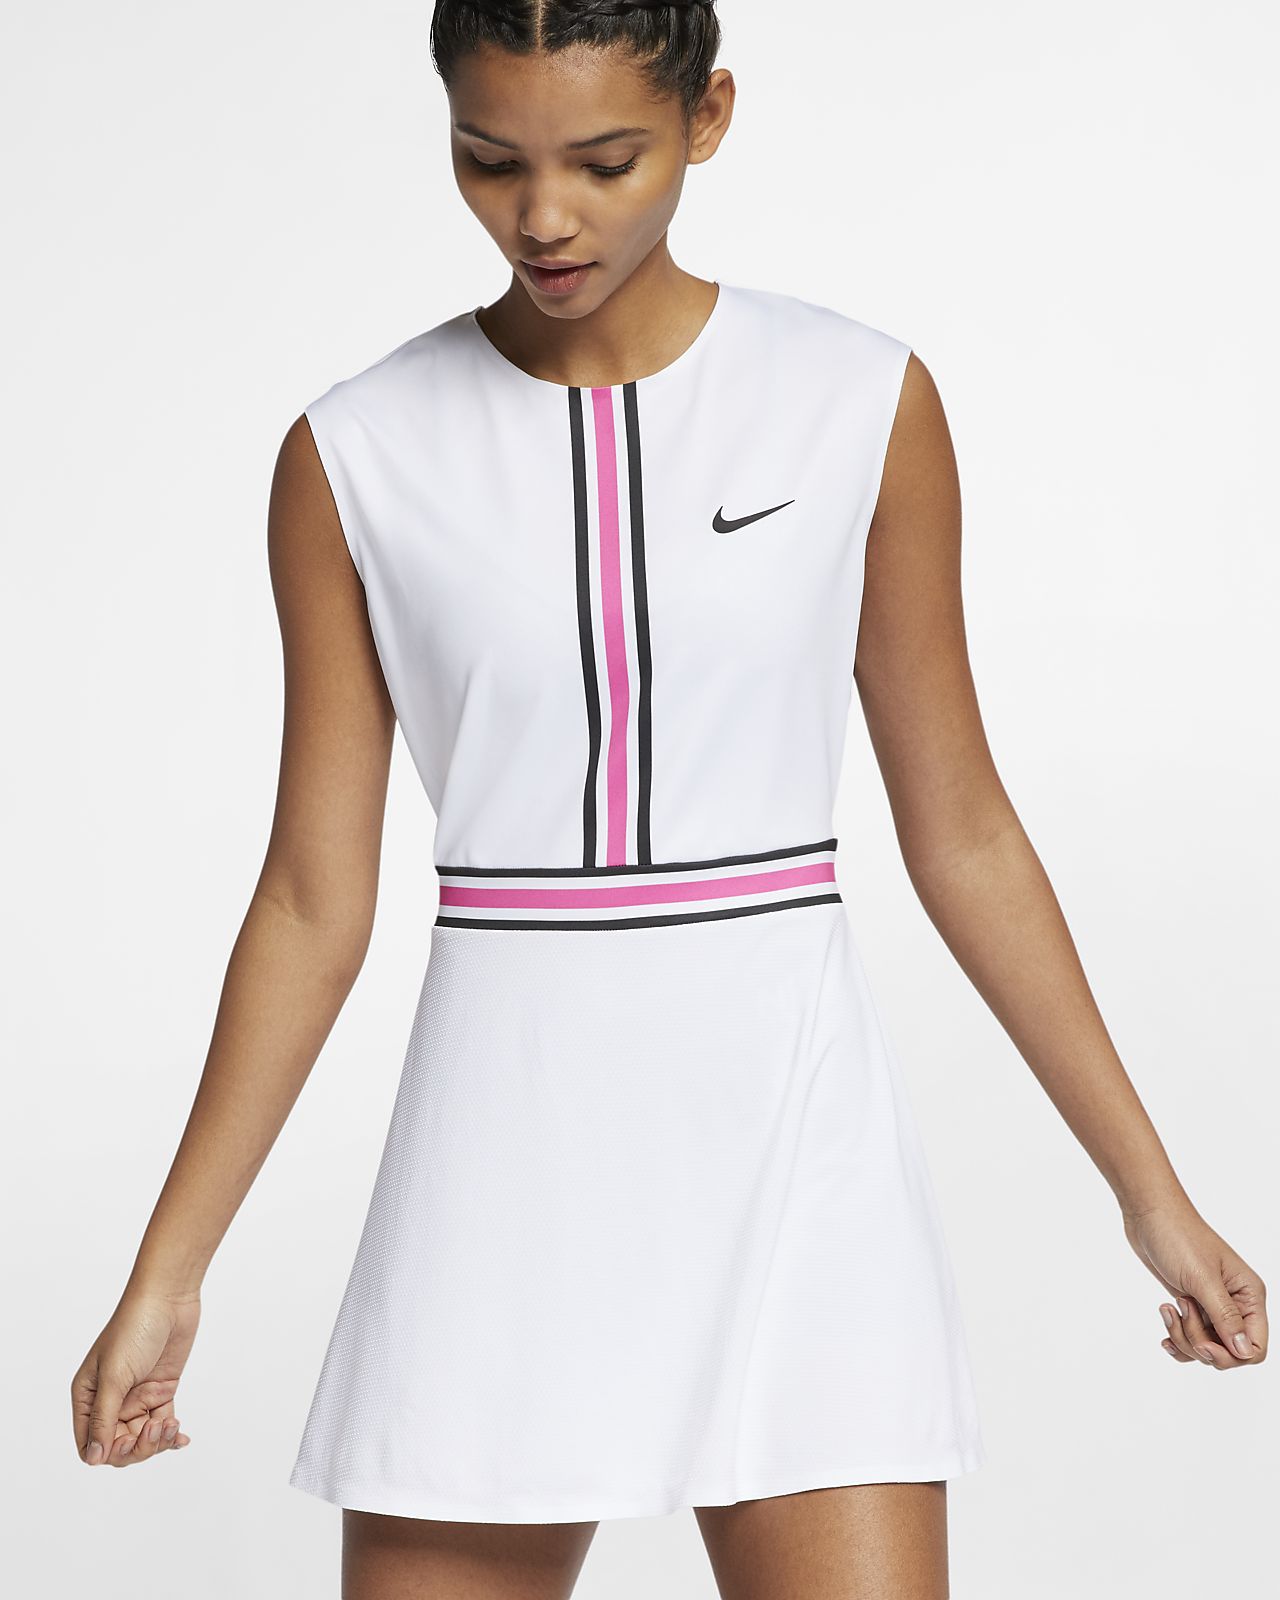 Tennis Cocktail Dresses – Fashion dresses